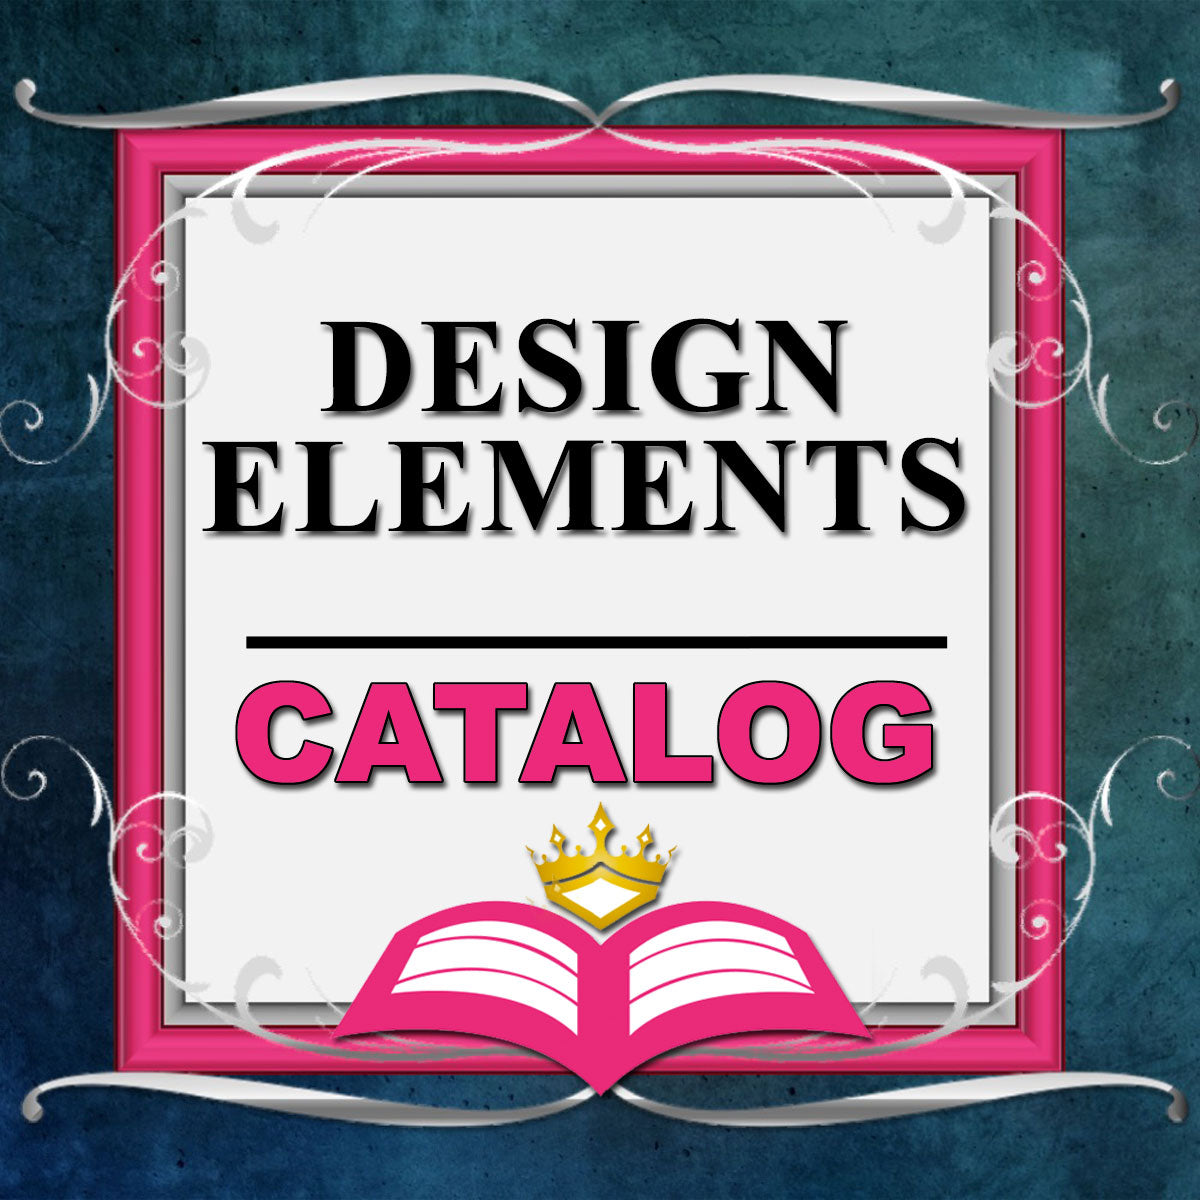 Catalog - Design Elements